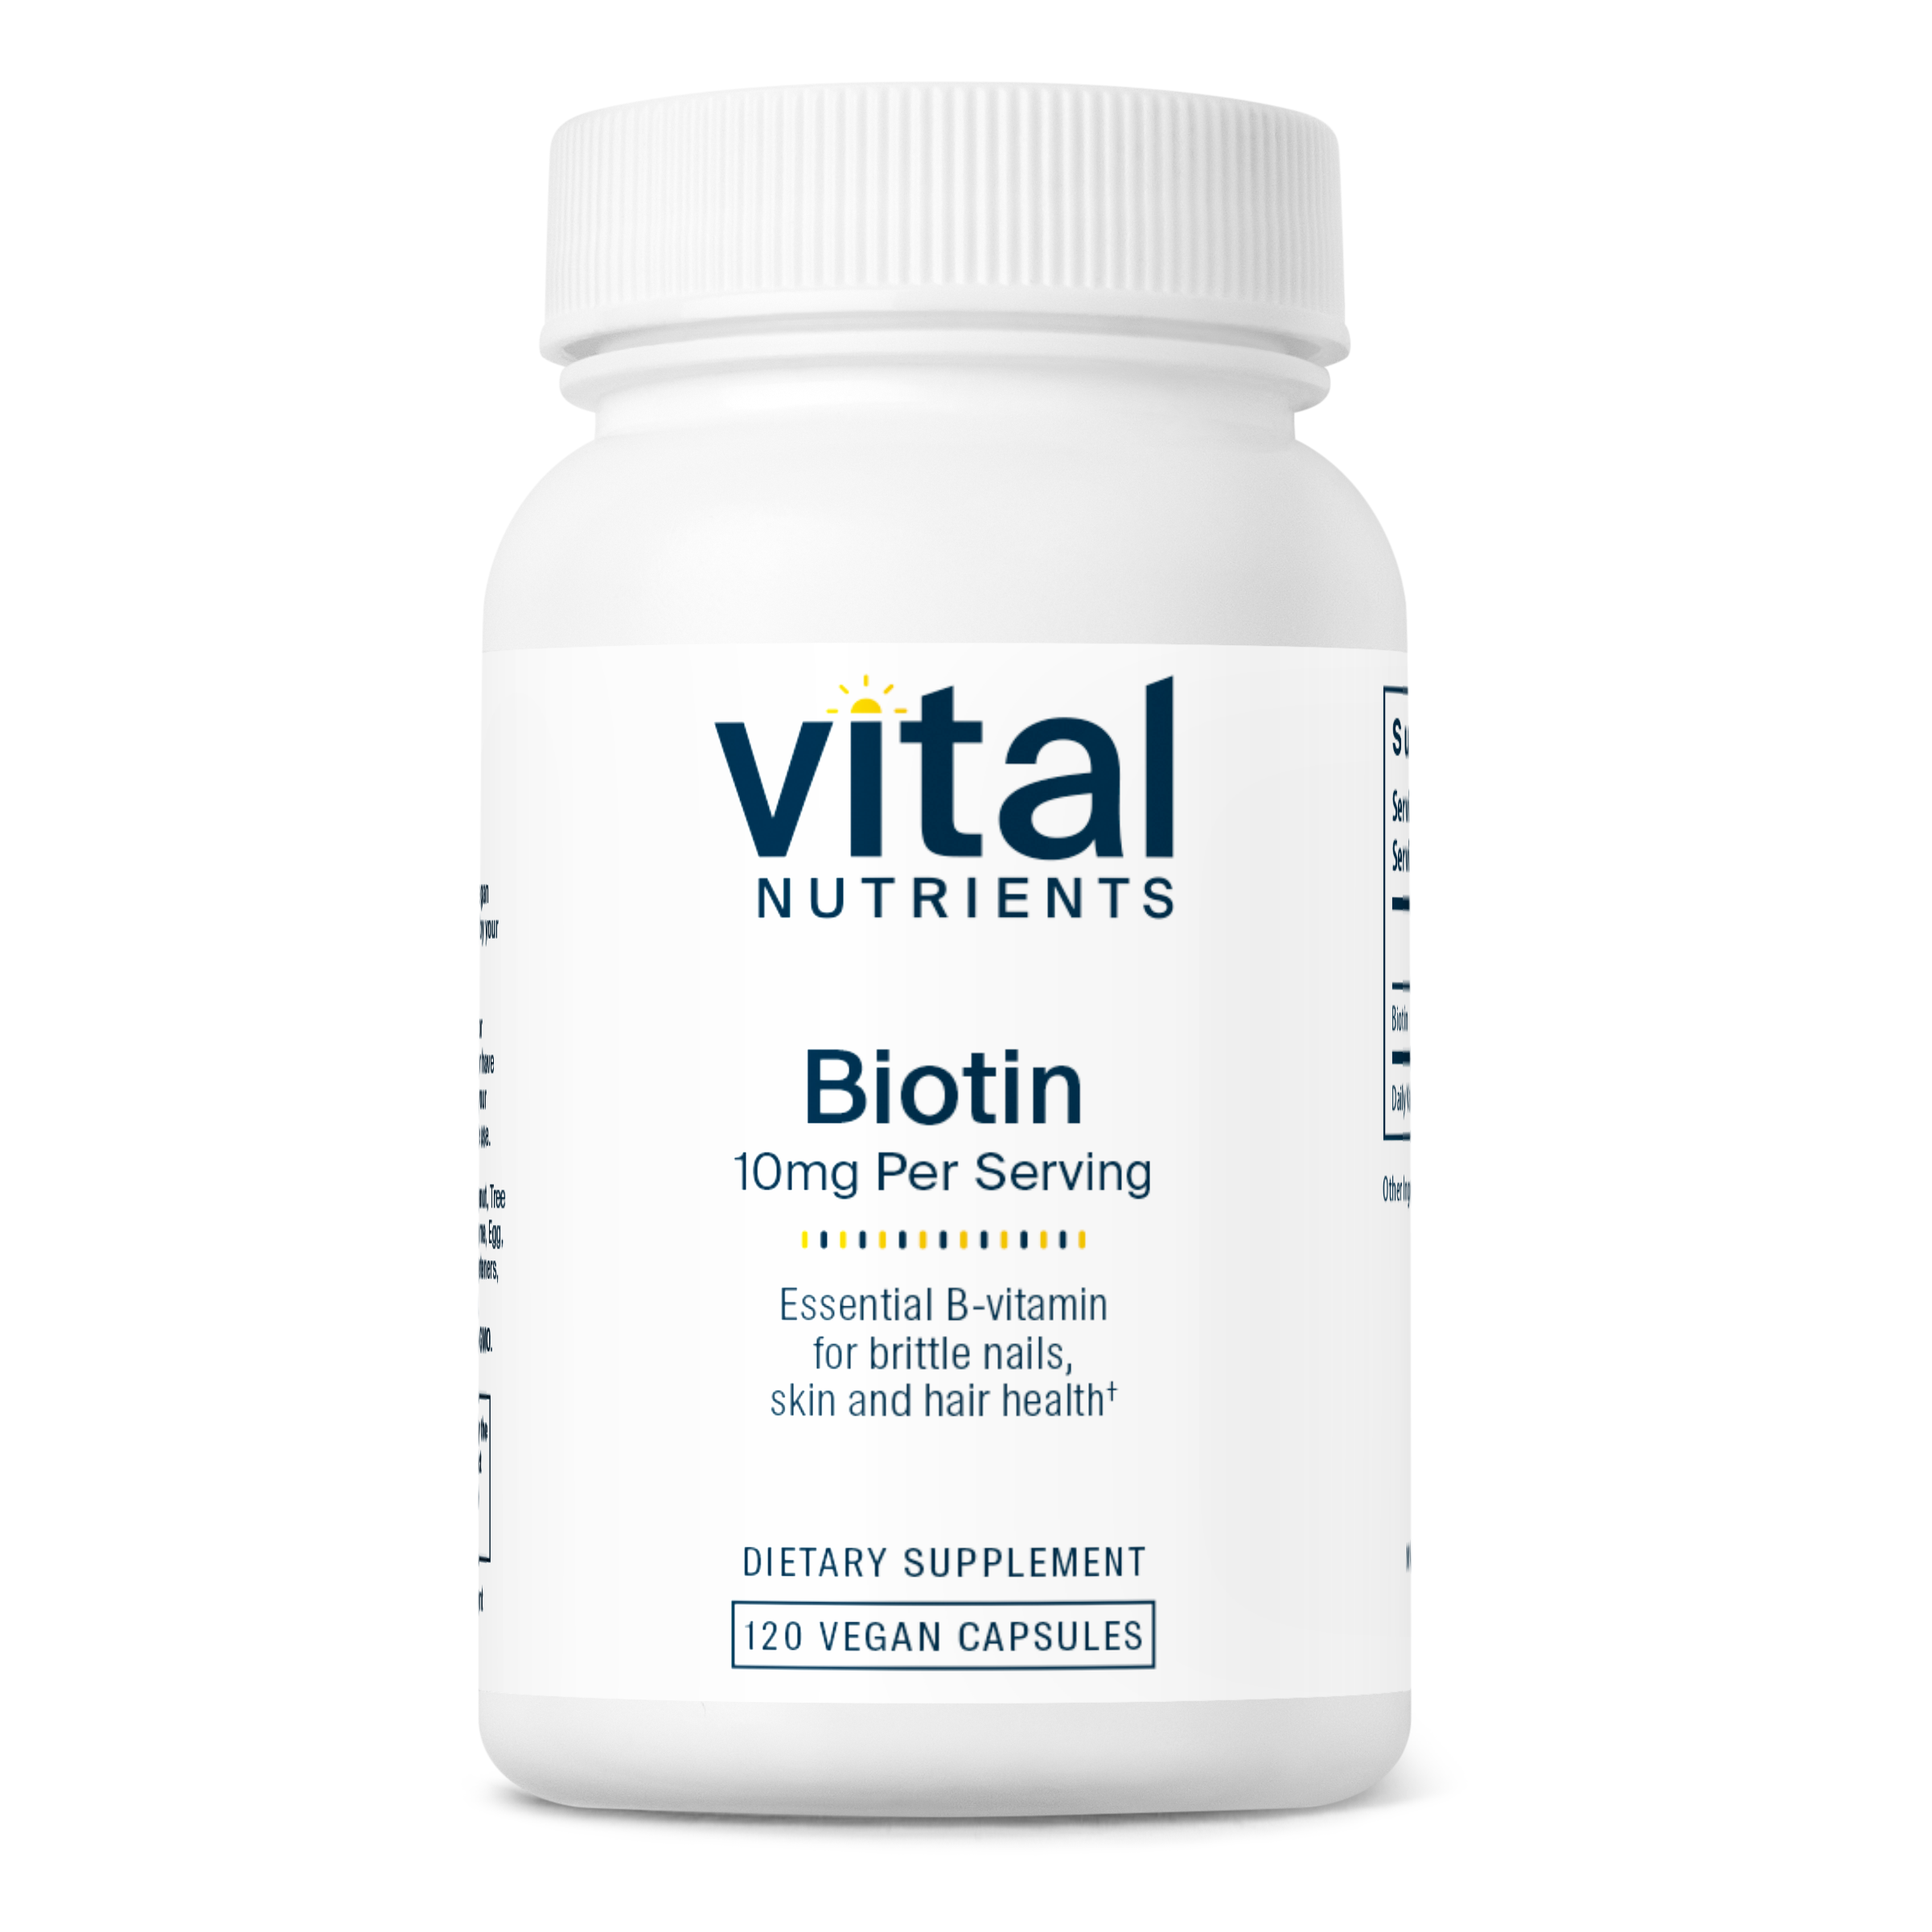 Vital Nutrients Biotin 10mg per serving front bottle